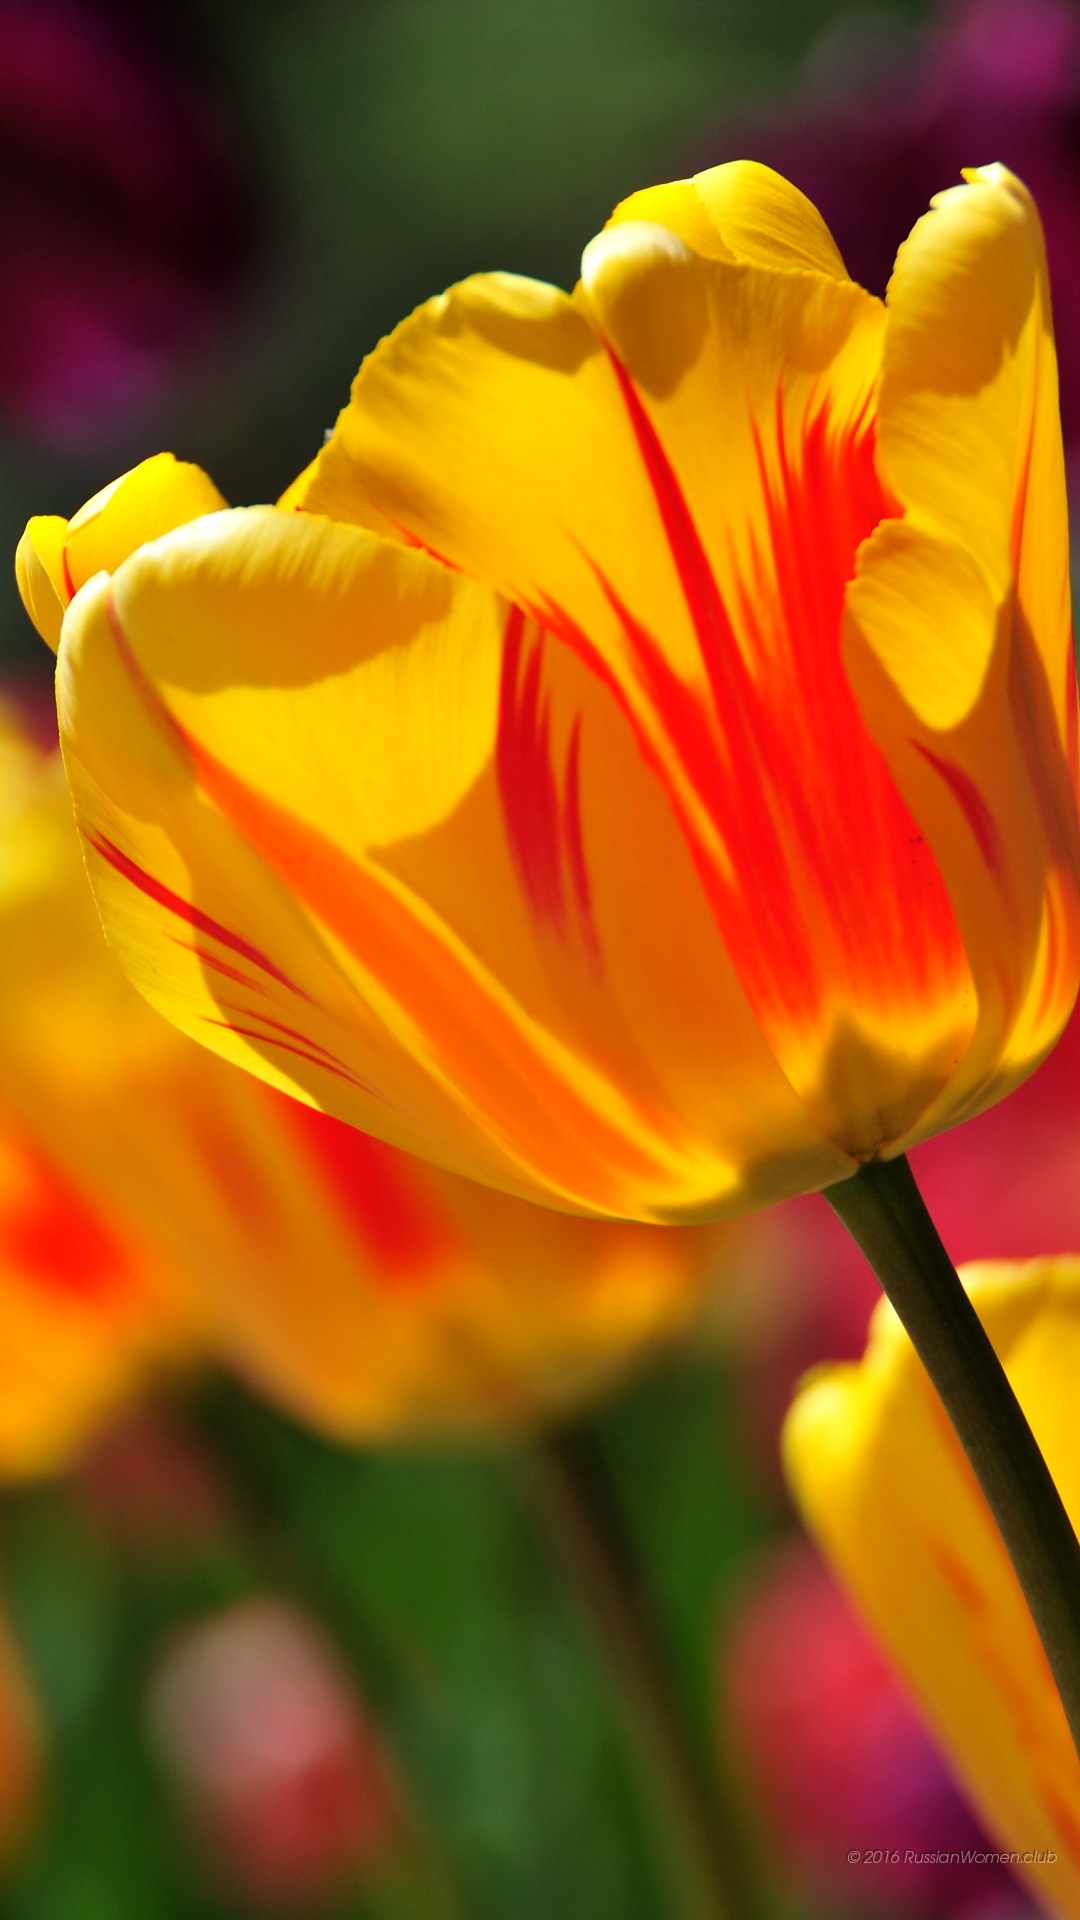 wallpaper asus zenfone go,flower,petal,tulip,yellow,close up